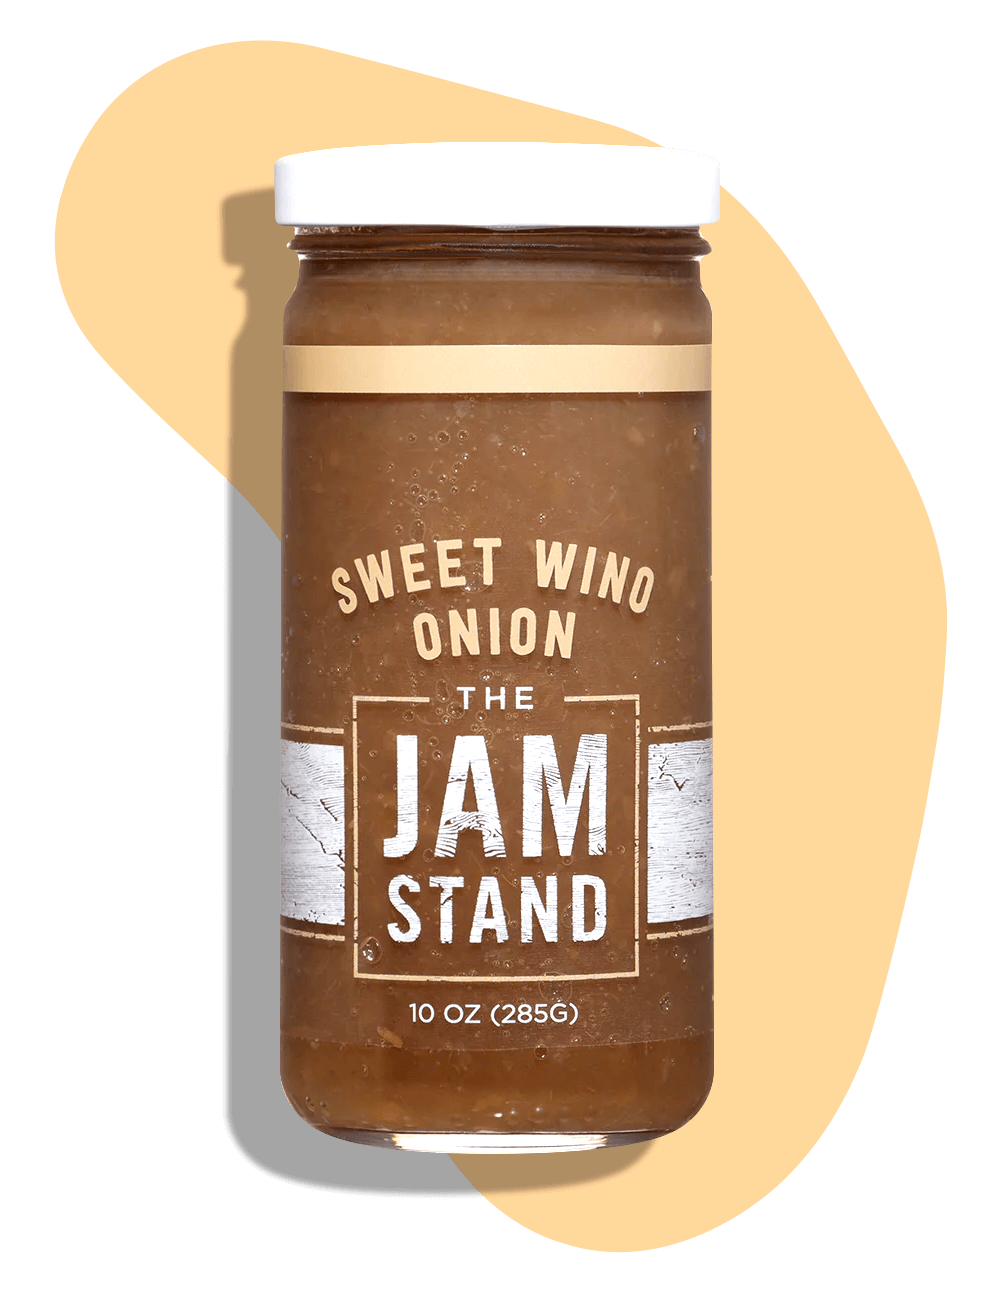 The Jam Stand: Onion Jam